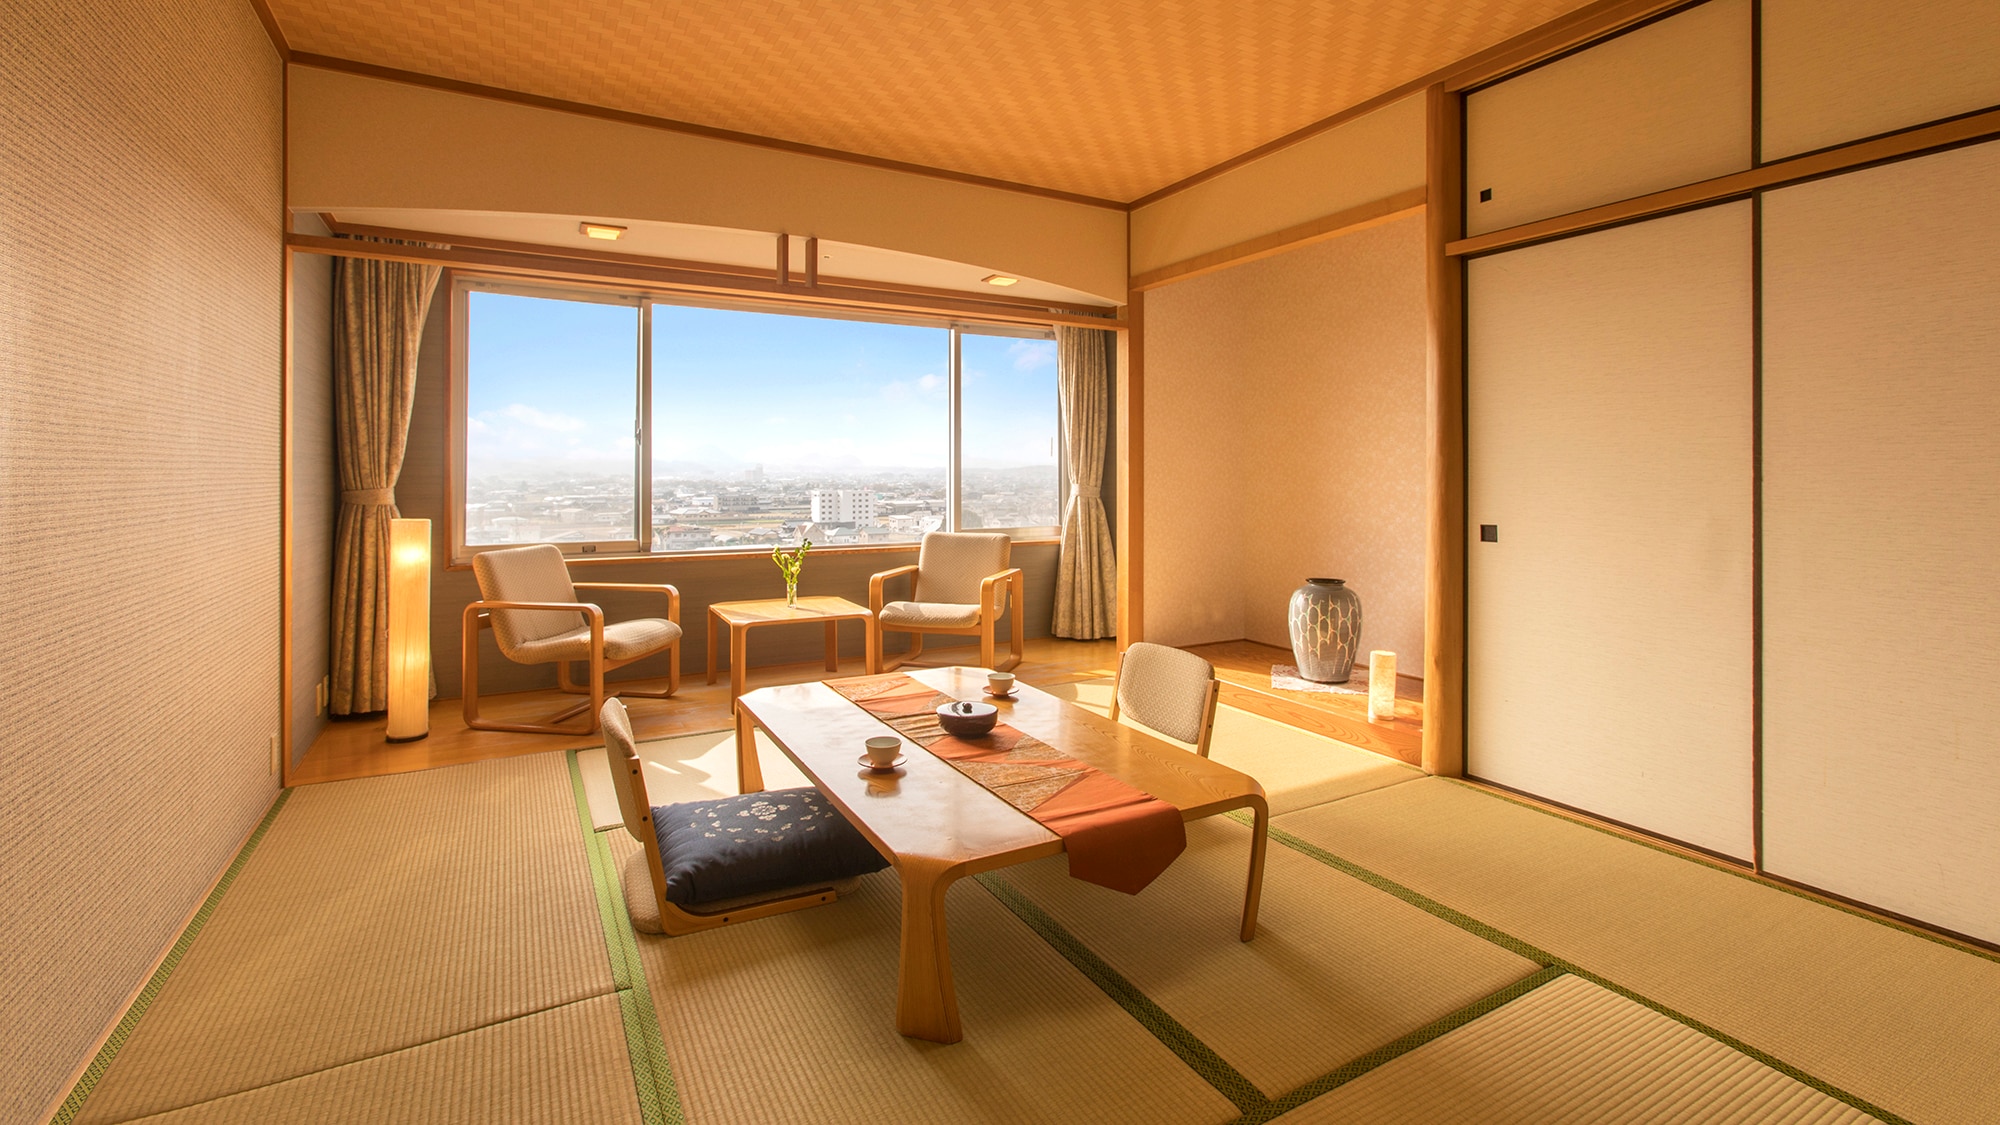 ◆ Japanese-style room 10 tatami mats ◆